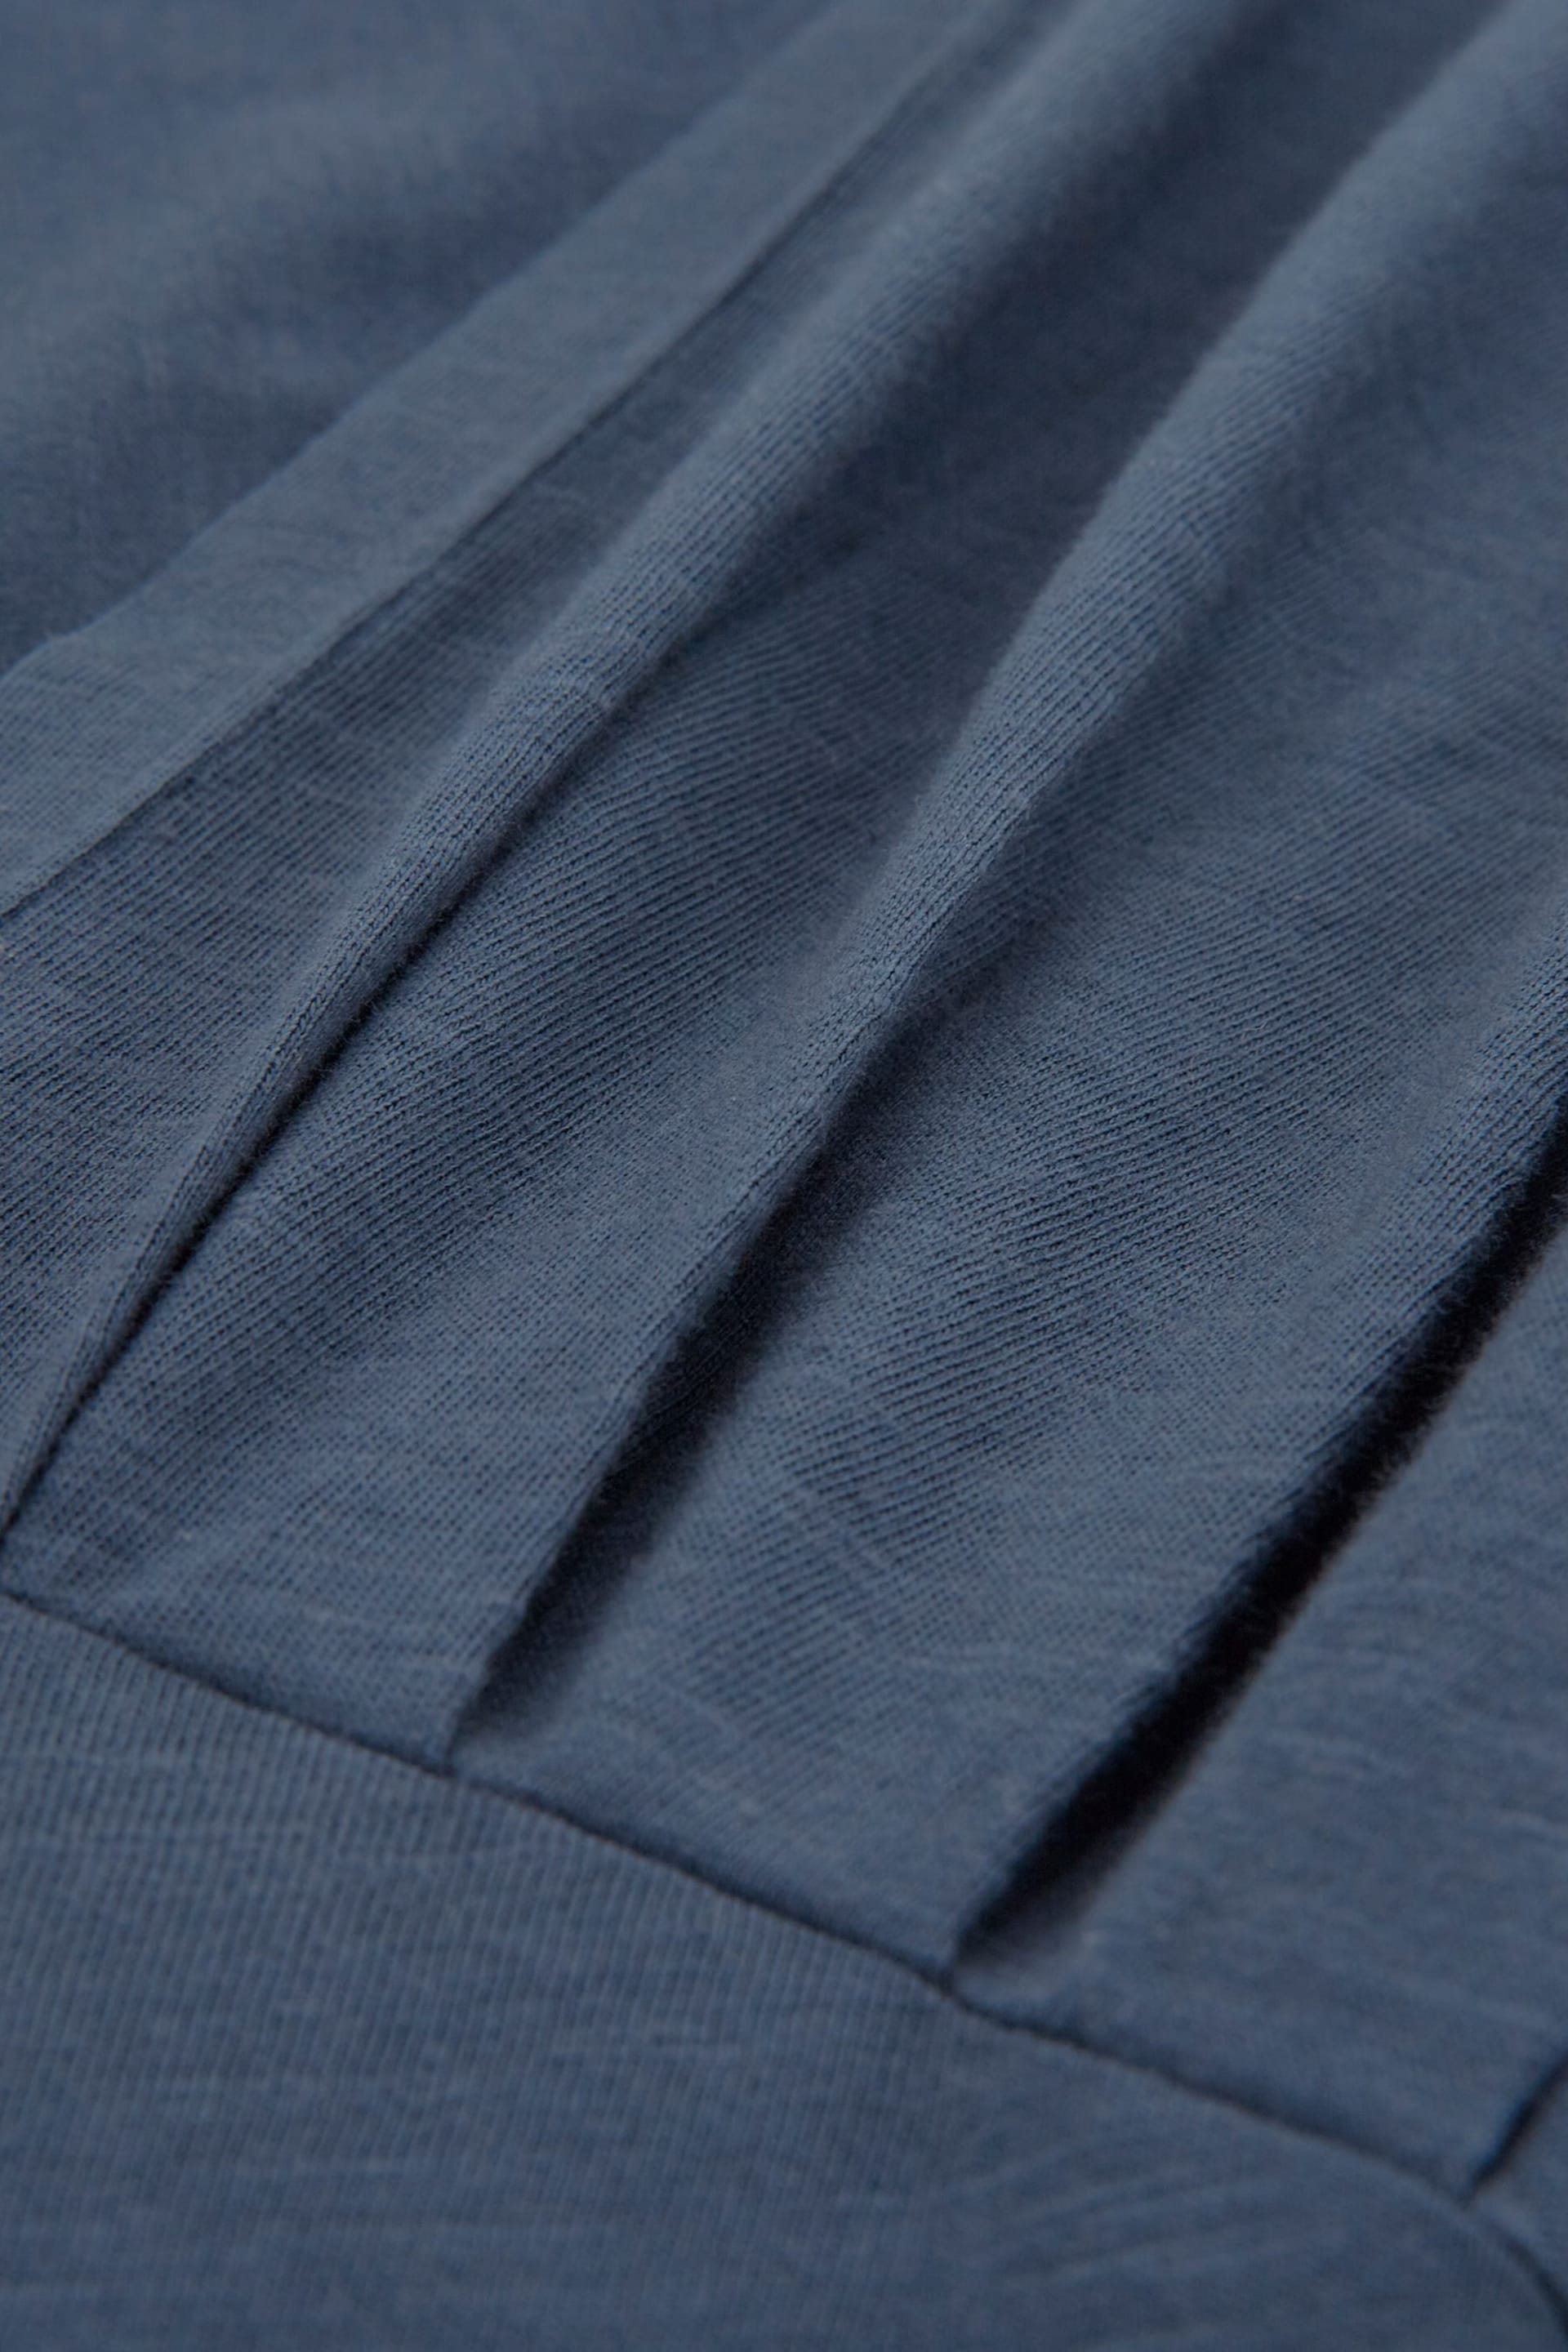 Celtic & Co. Blue Organic Cotton Slub Jersey Cardigan - Image 5 of 6